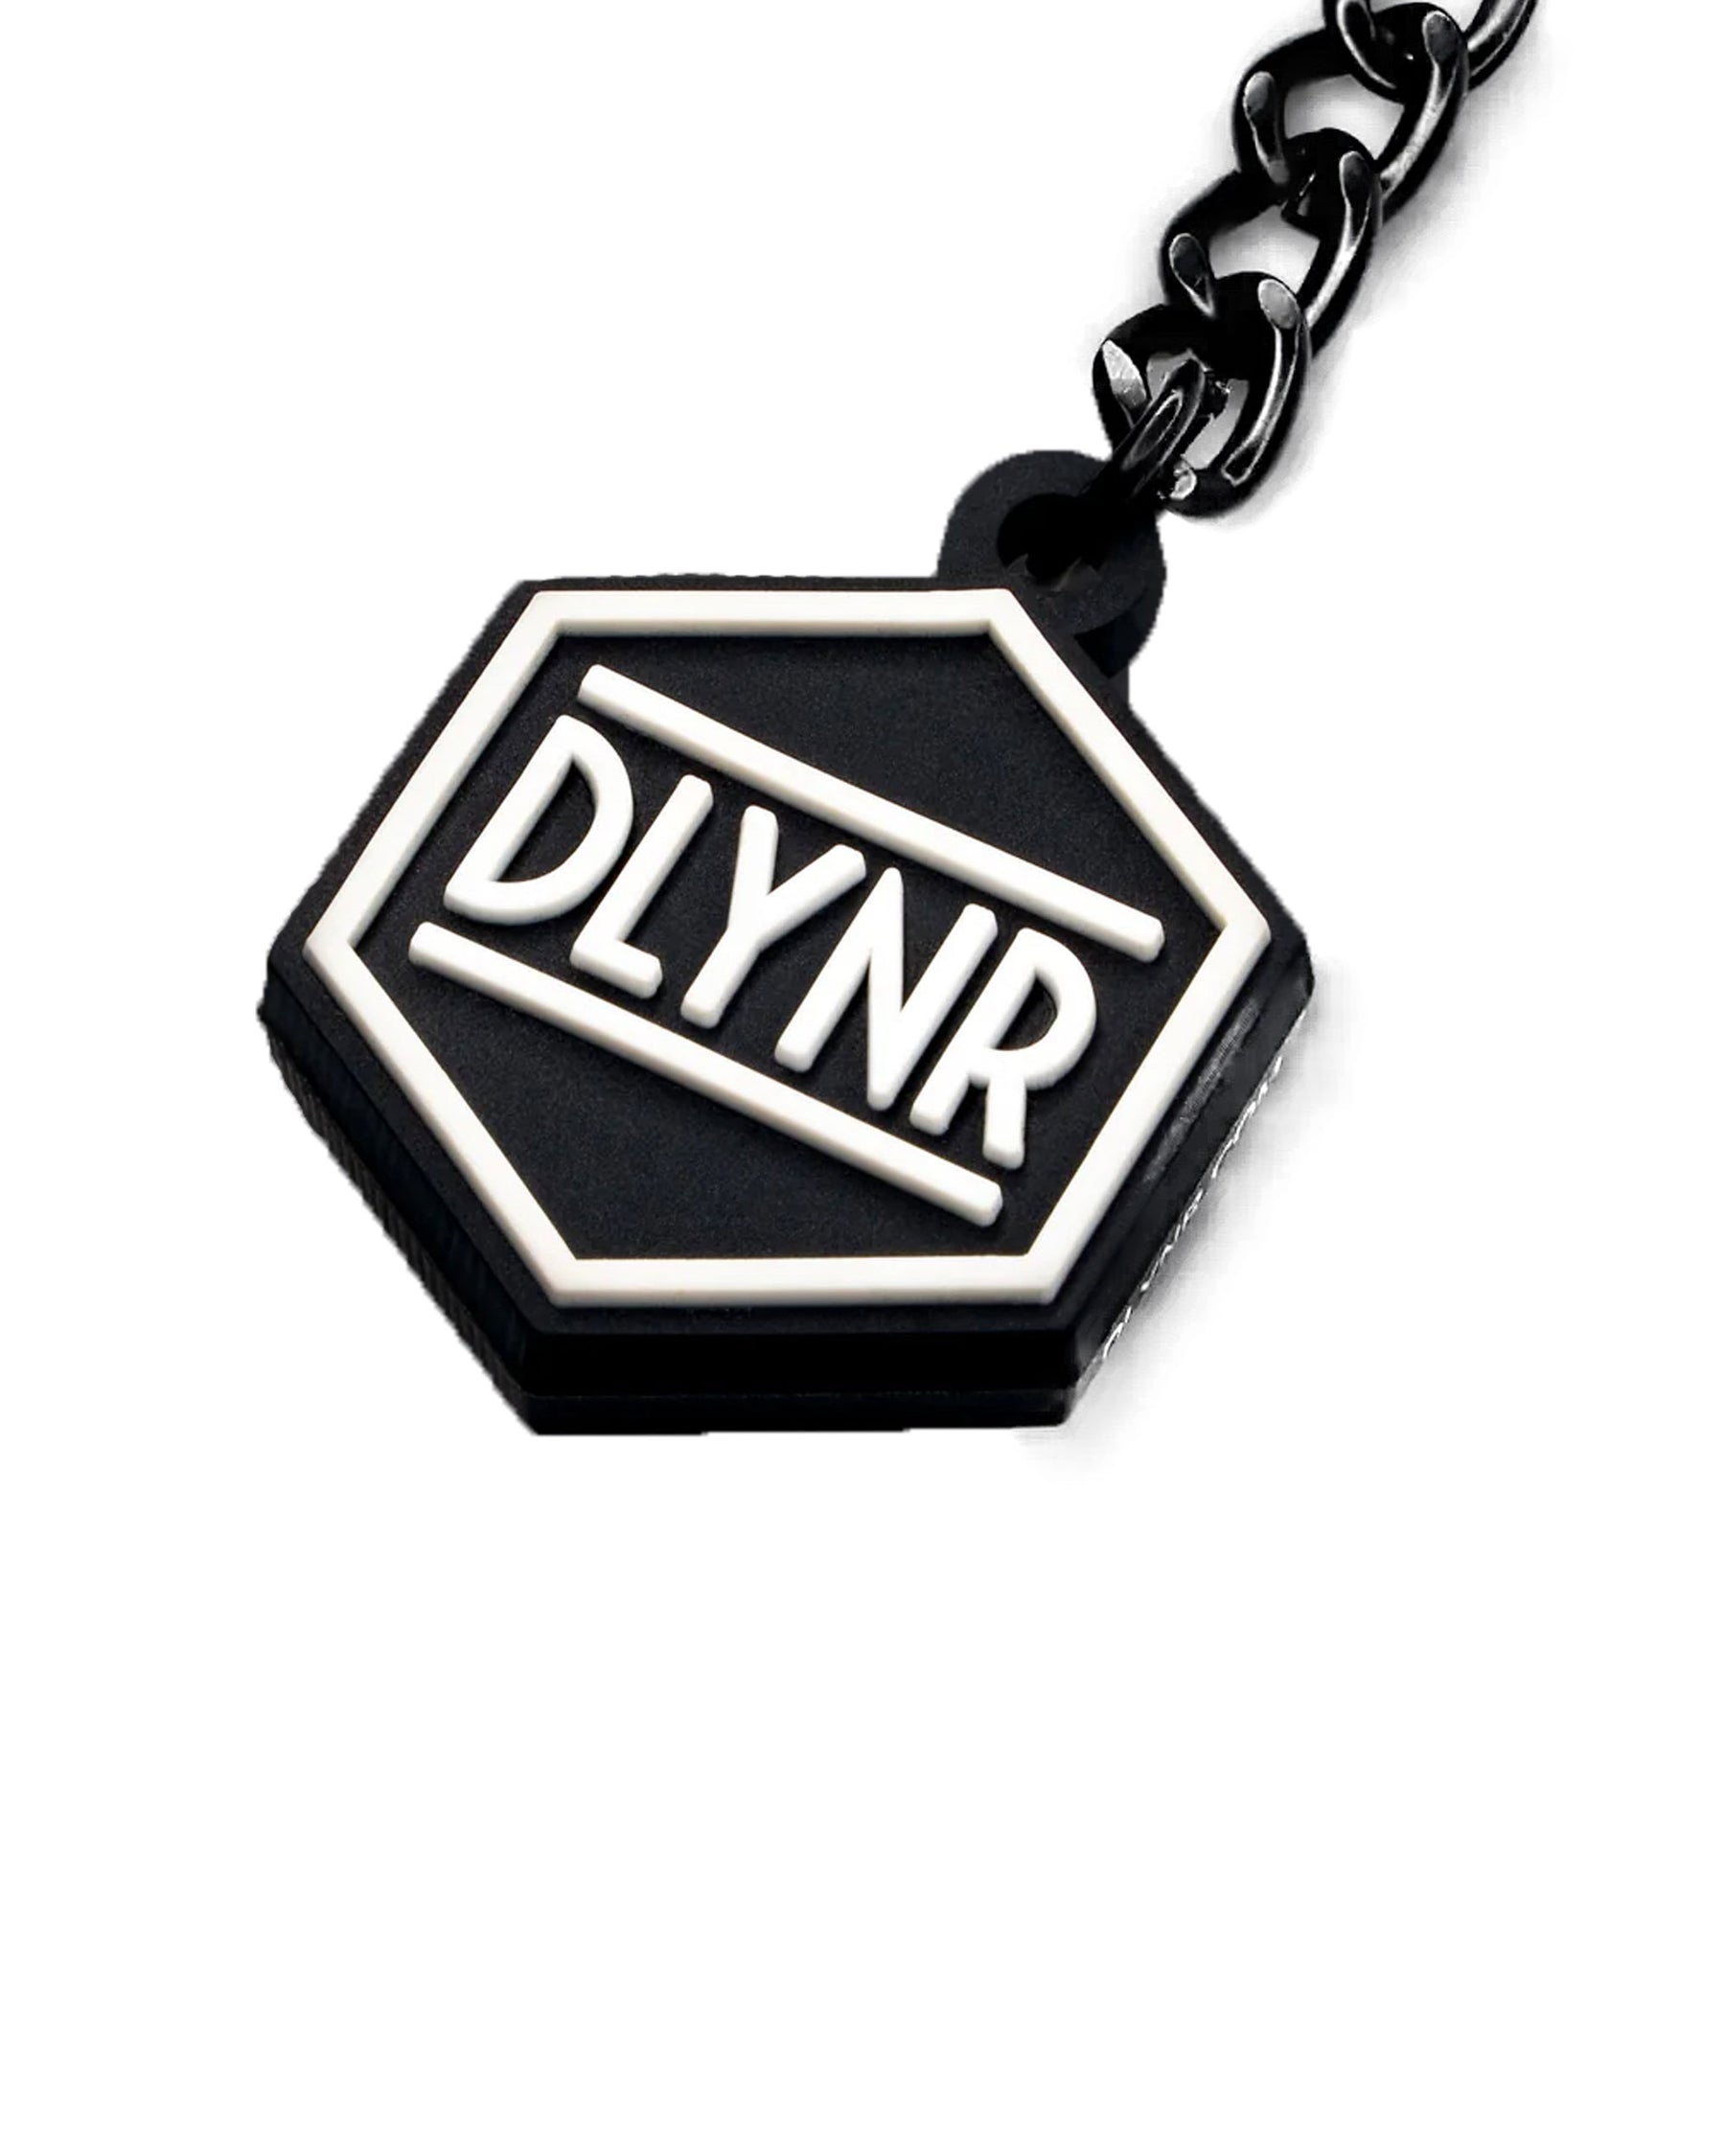 Portachiavi Dolly Noire Logo Keychain Black